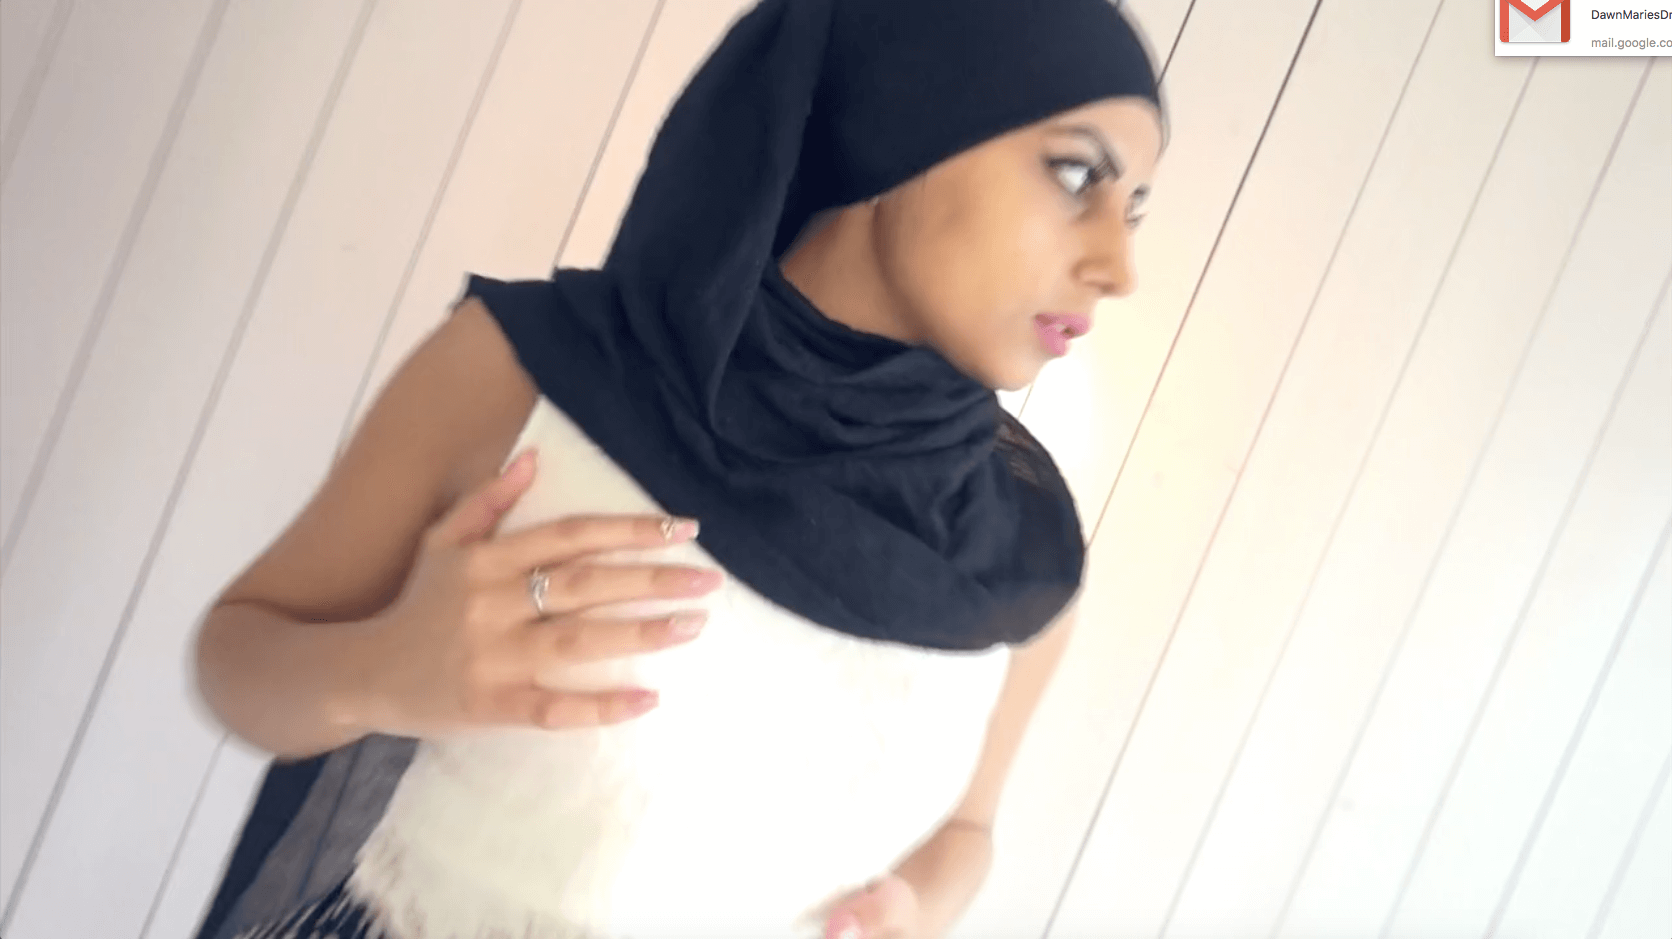 Muslim Teen Girls Sex Chat